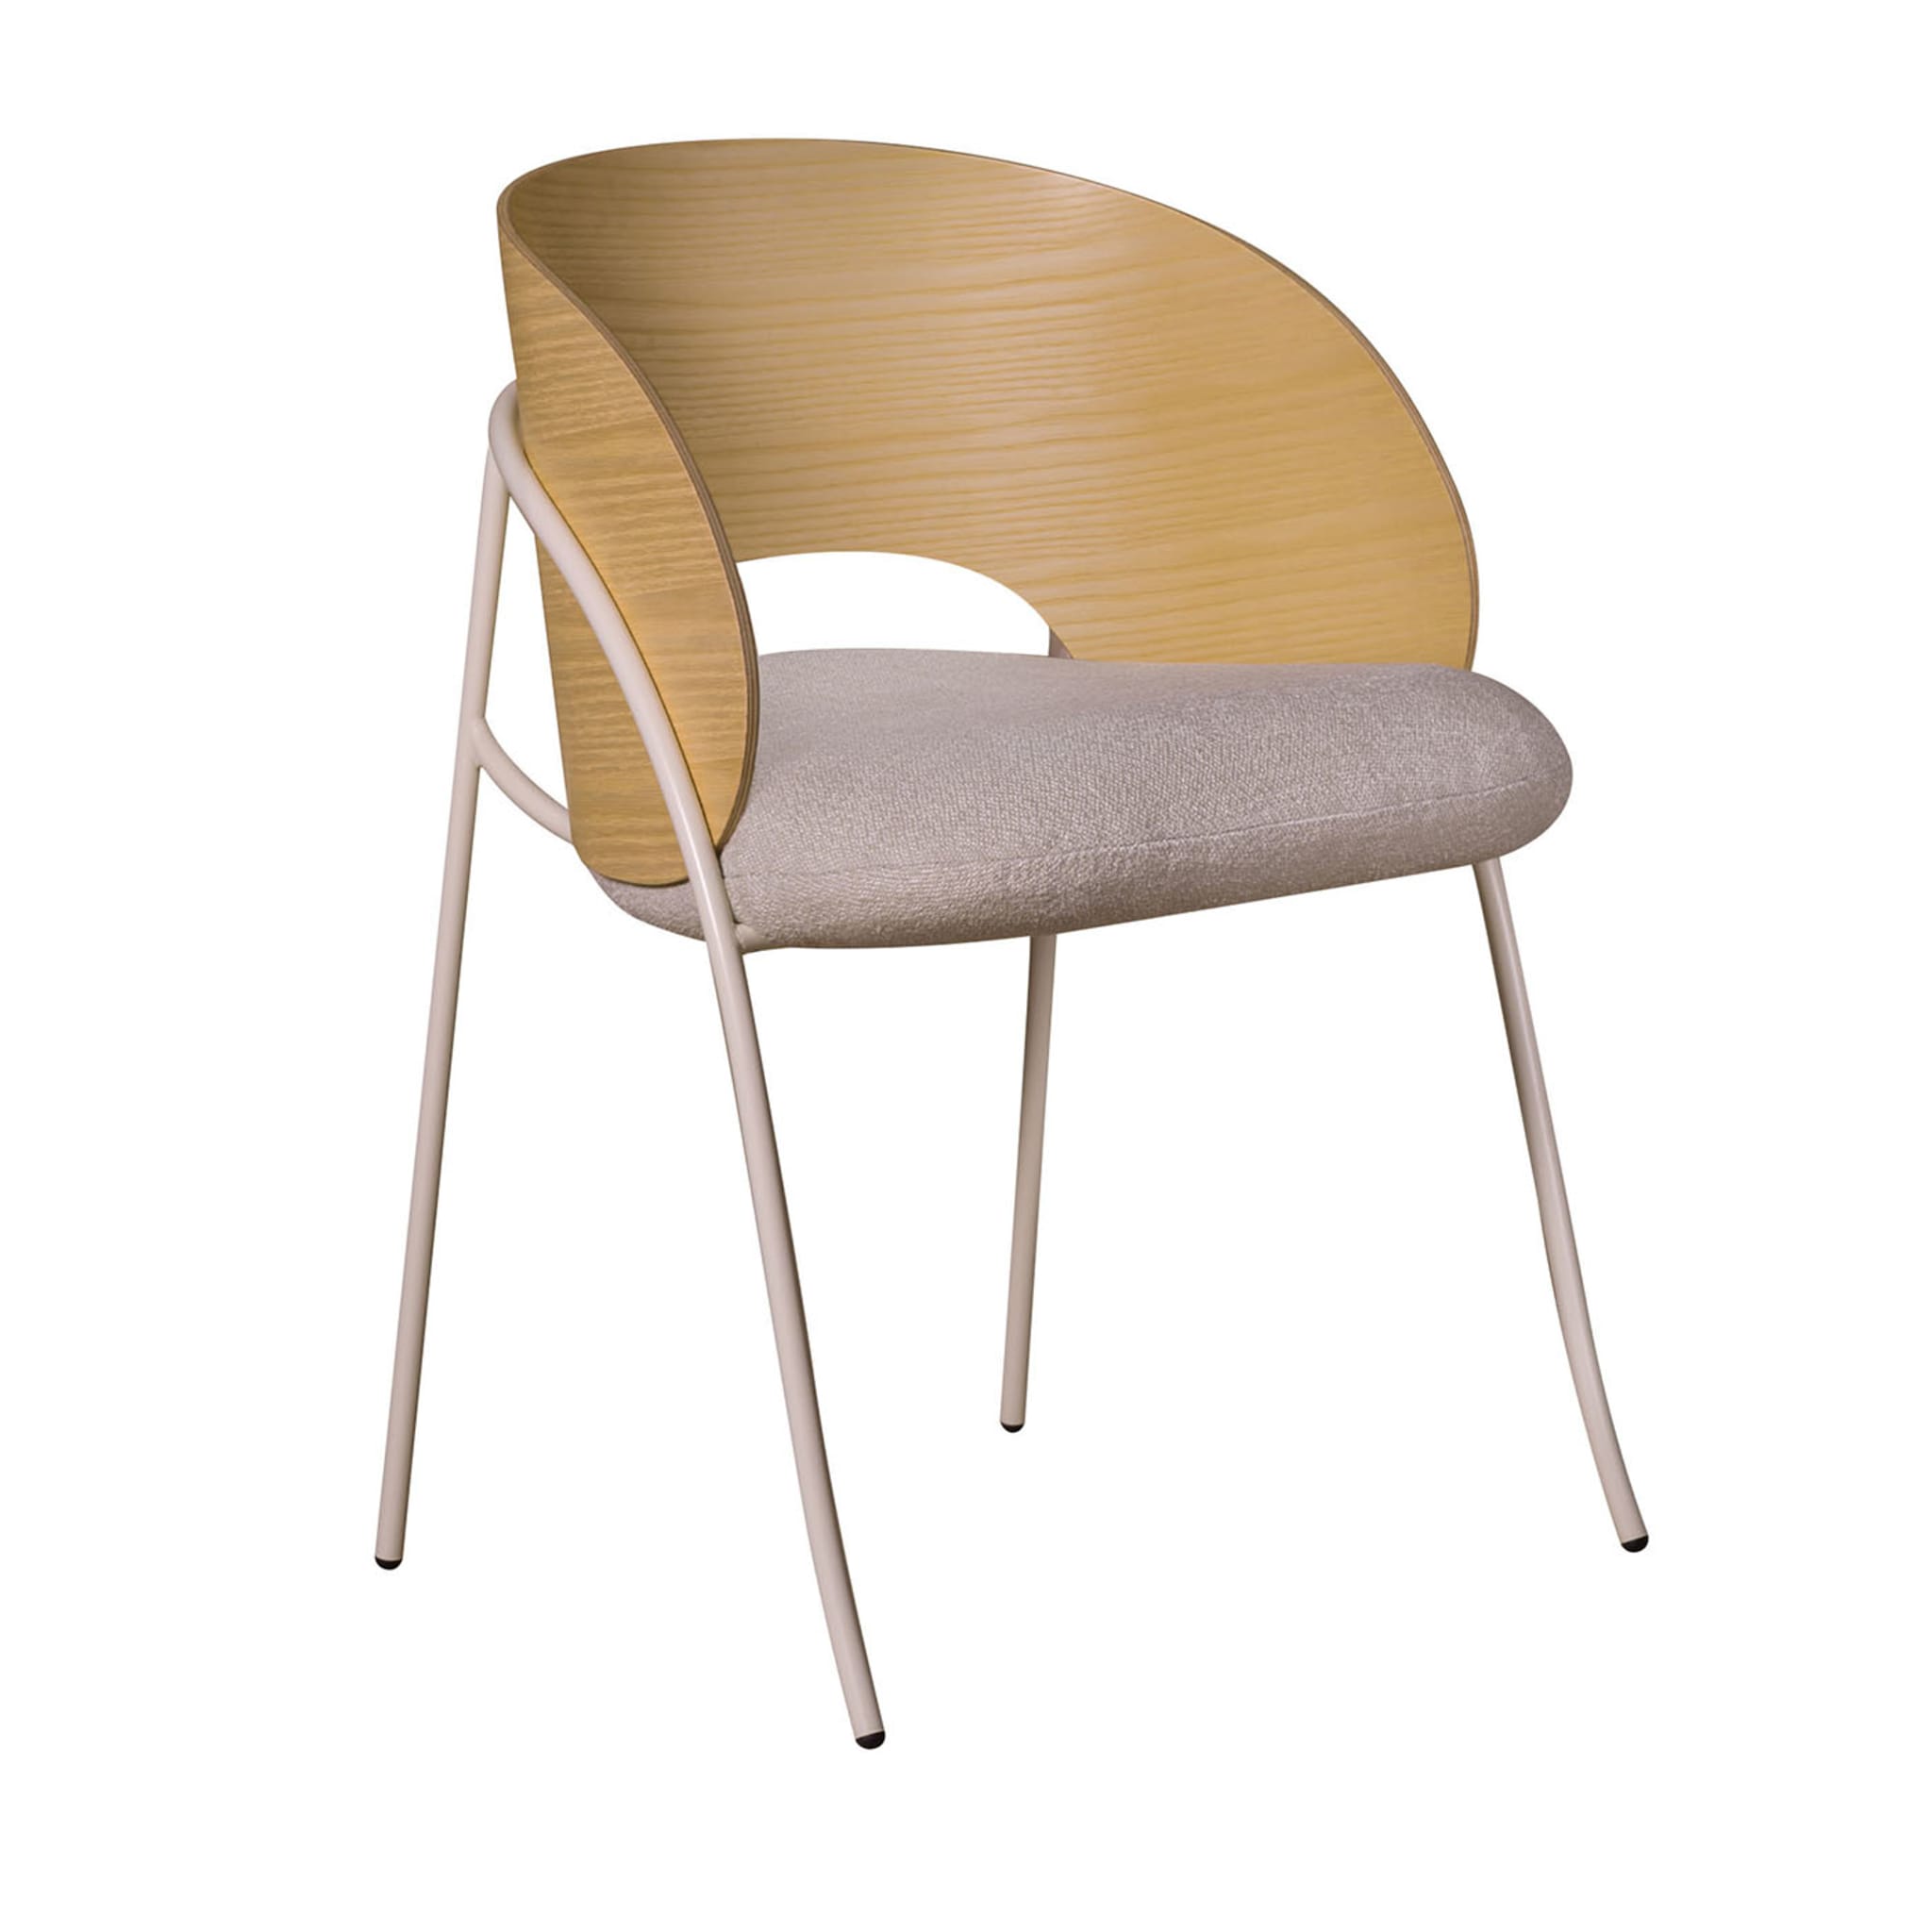 Hagu Chair by Ed Ng, AB Concept - Main view